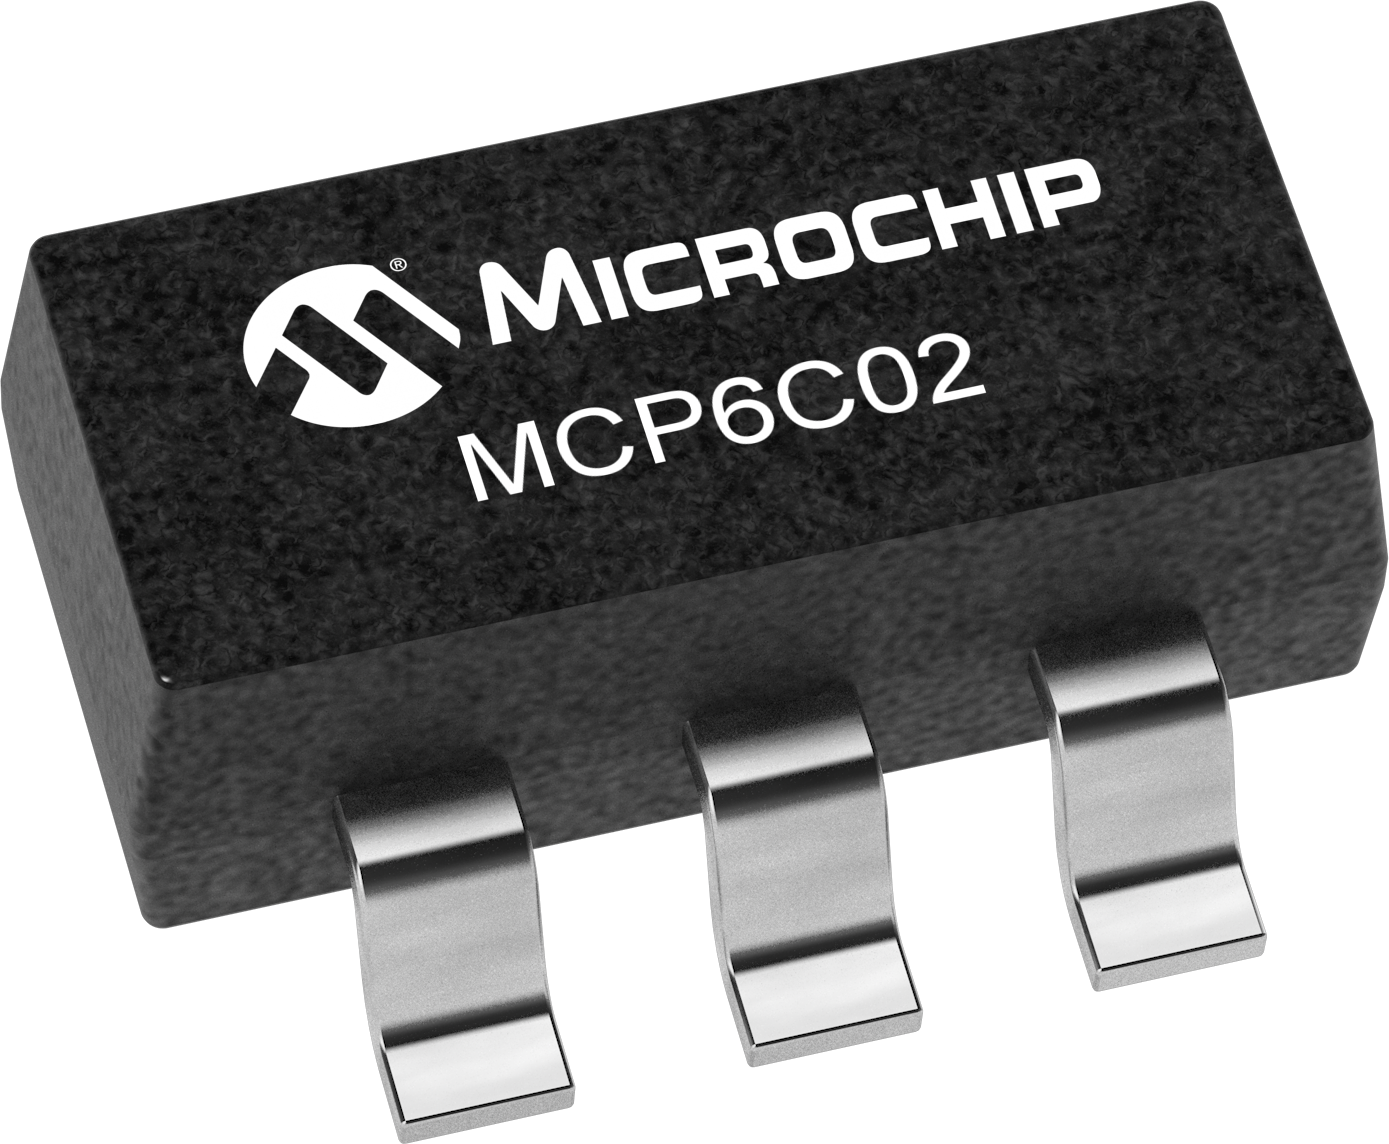 Microchip為高溫車載應用提供精確和節能的電流監測解決方案